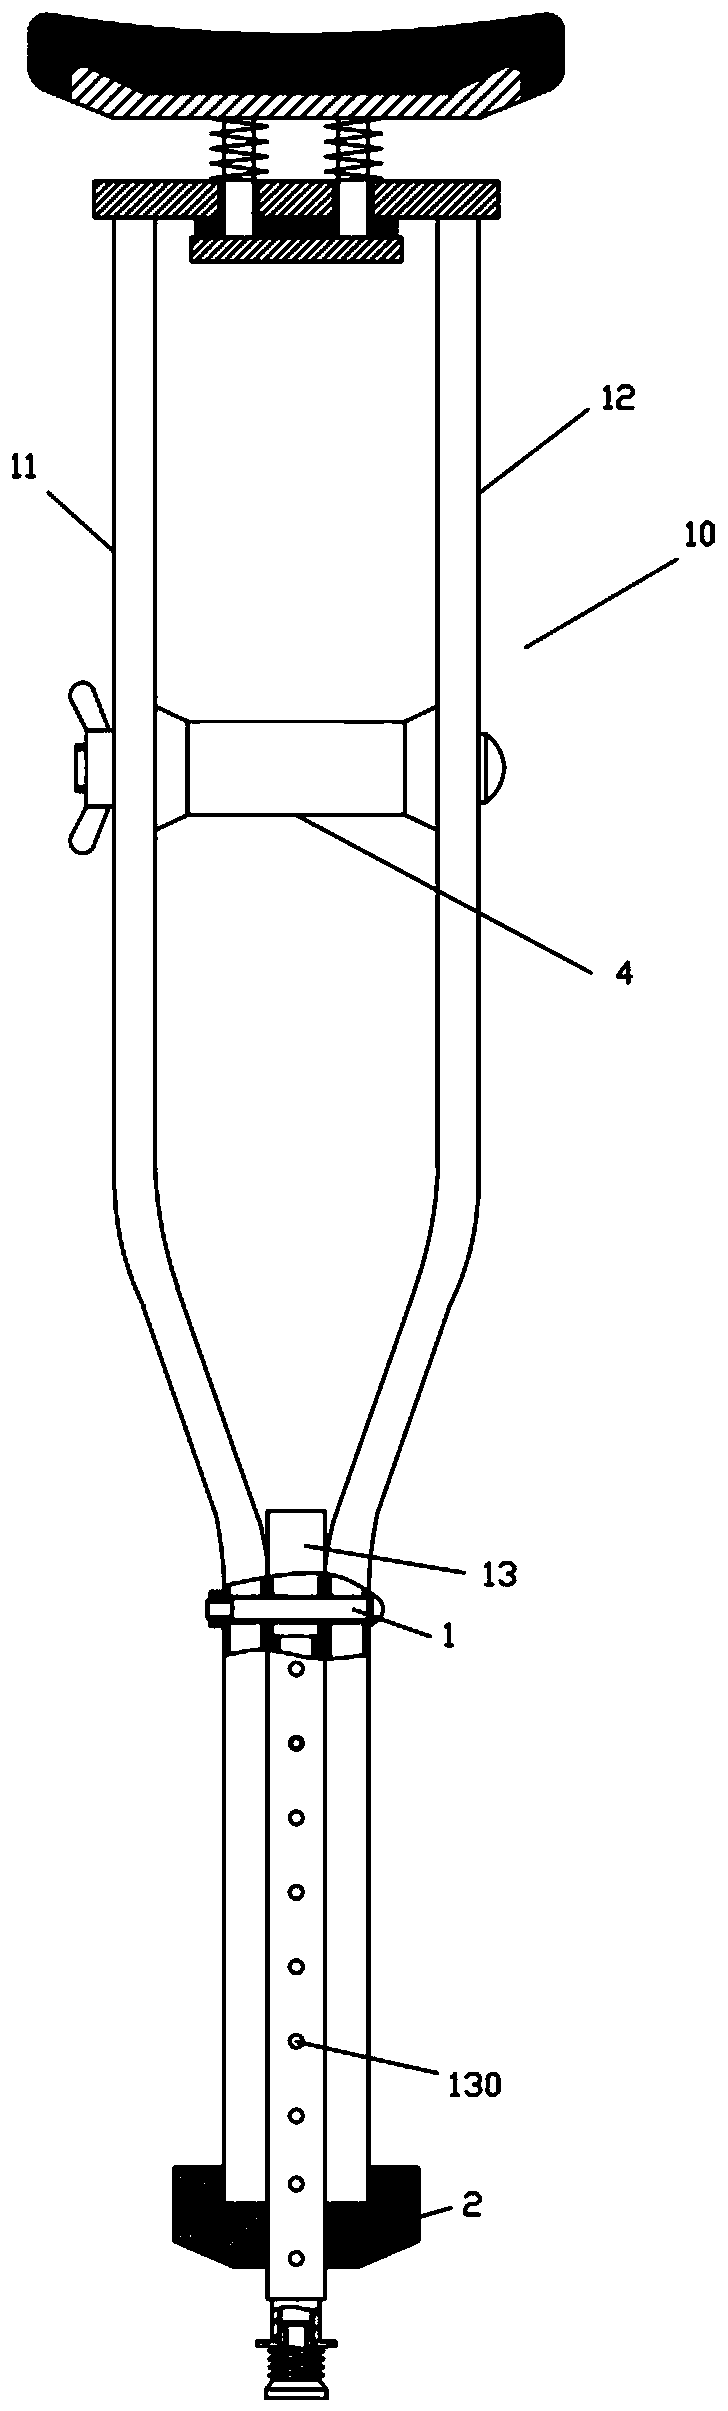 Walking aid axillary crutch with axillary buffer structure